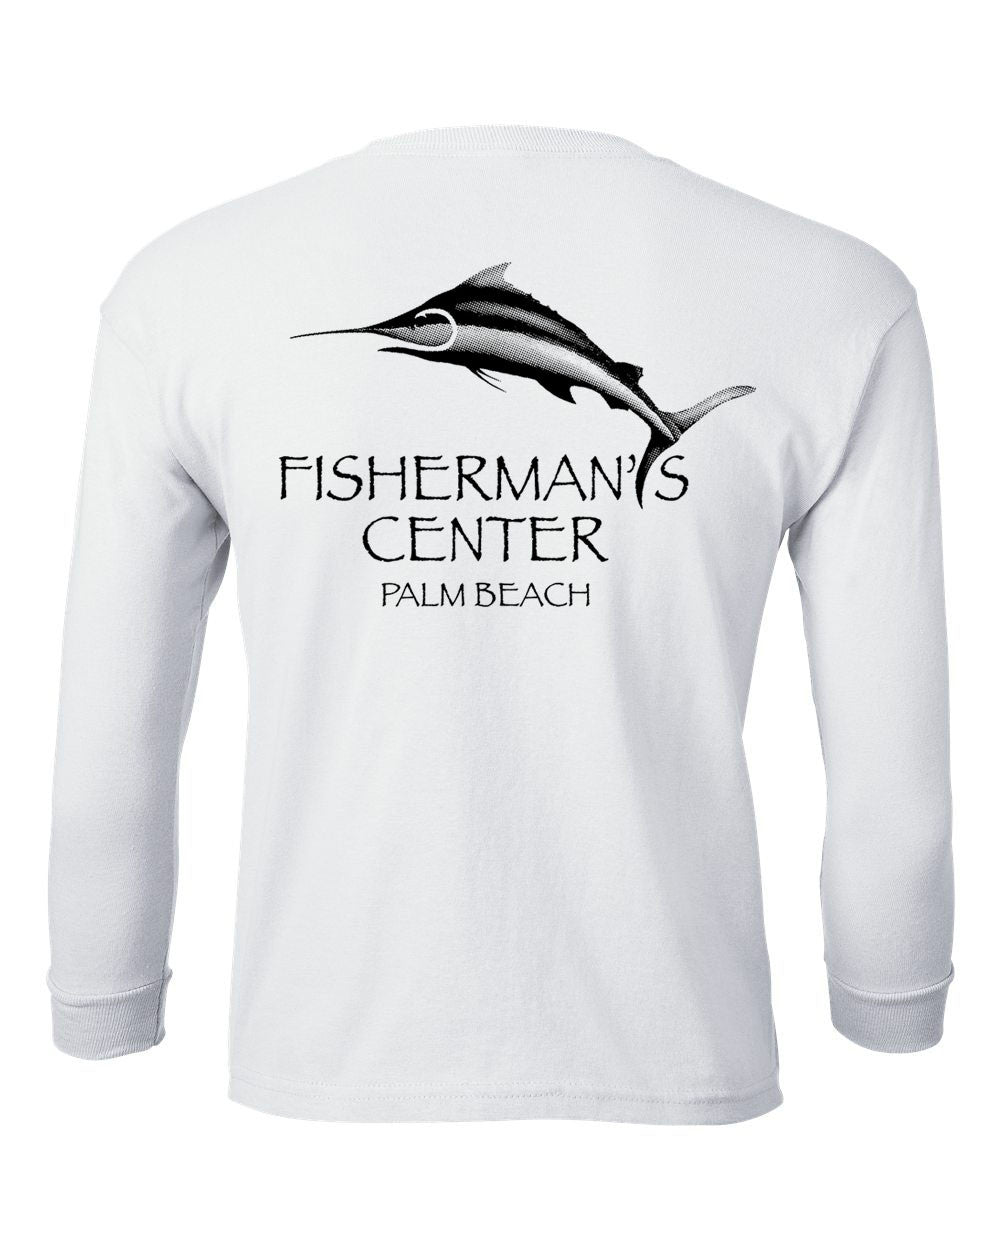 The Fisherman's Center Original Long Sleeve T-Shirt